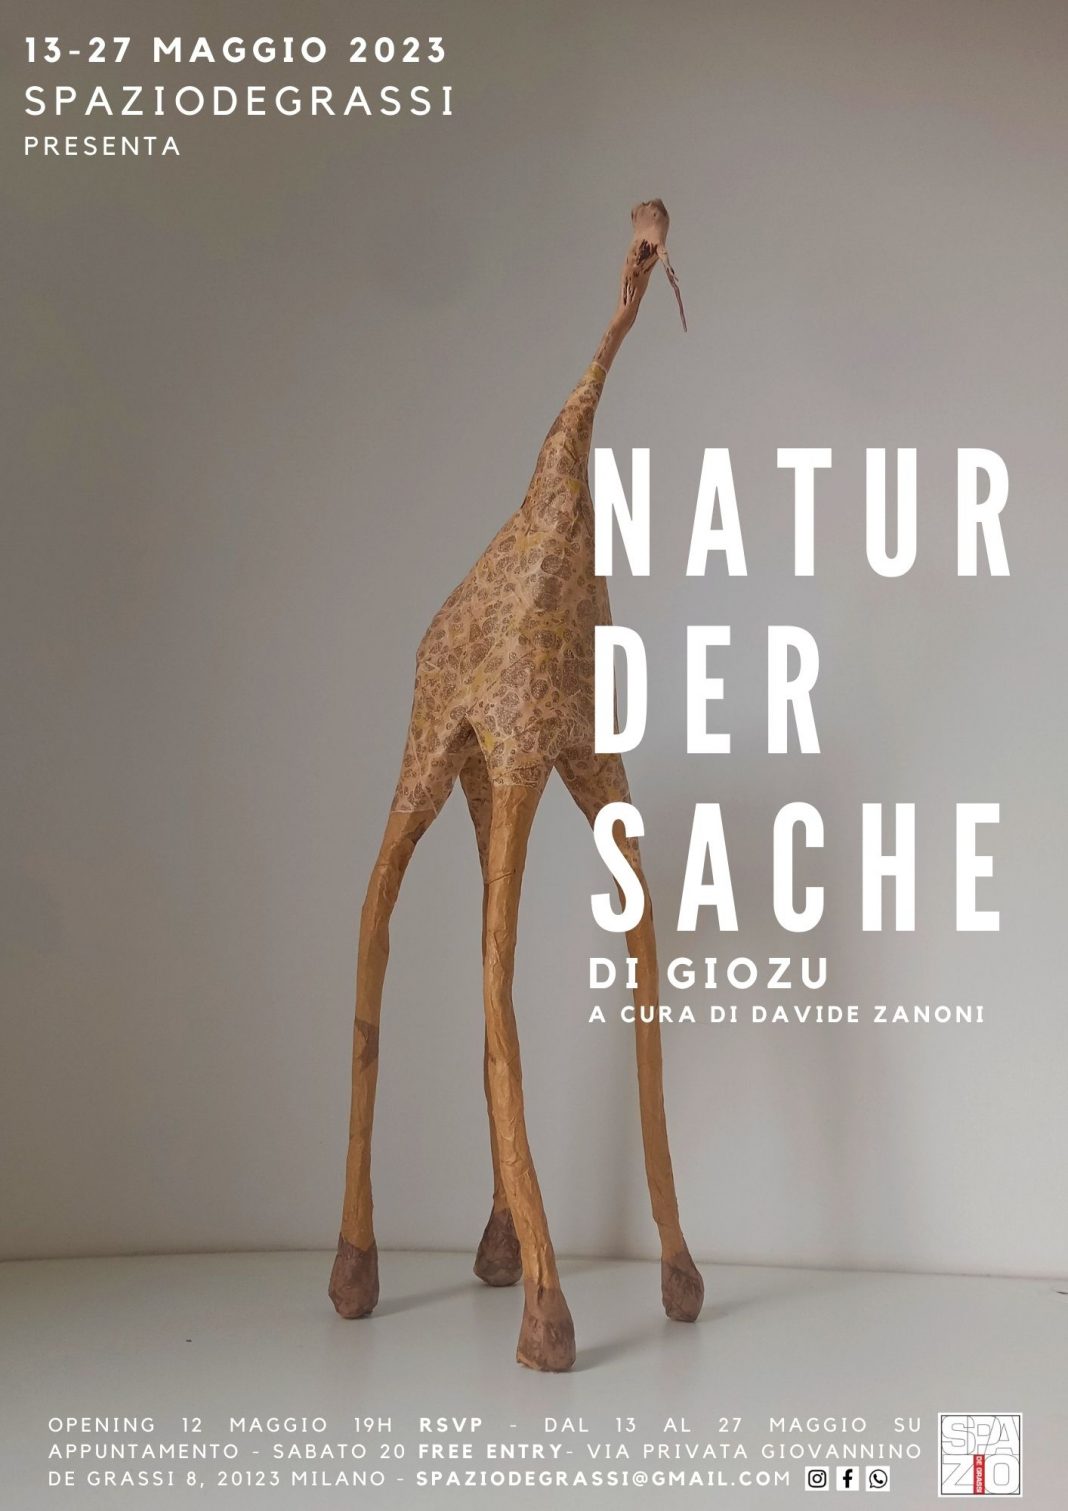 Natur Der Sachehttps://www.exibart.com/repository/media/formidable/11/img/3fc/zuffi-1068x1511.jpg